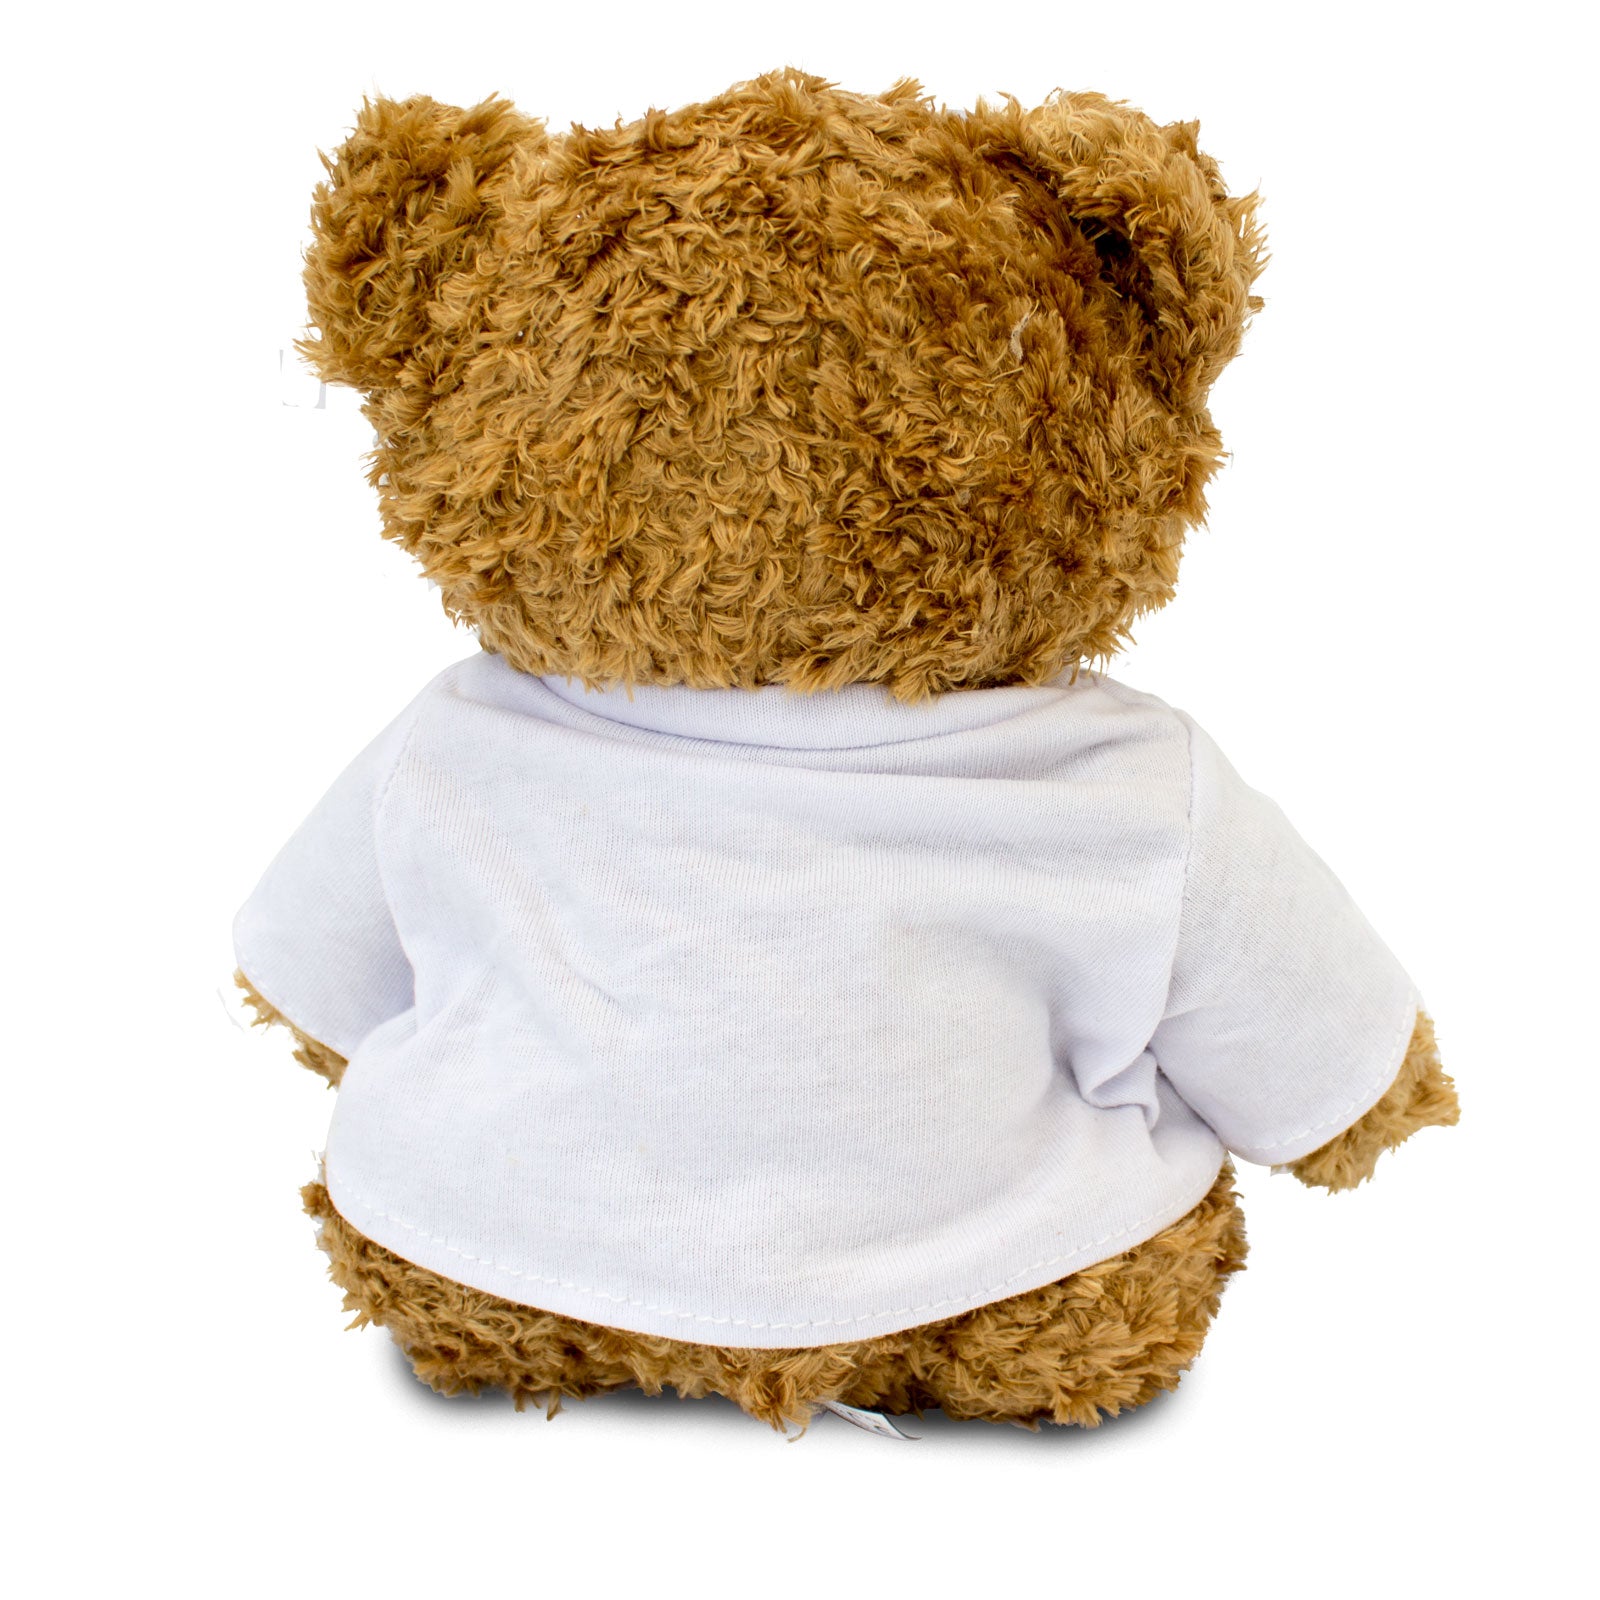 Get Well Soon Hyatt - Teddy Bear